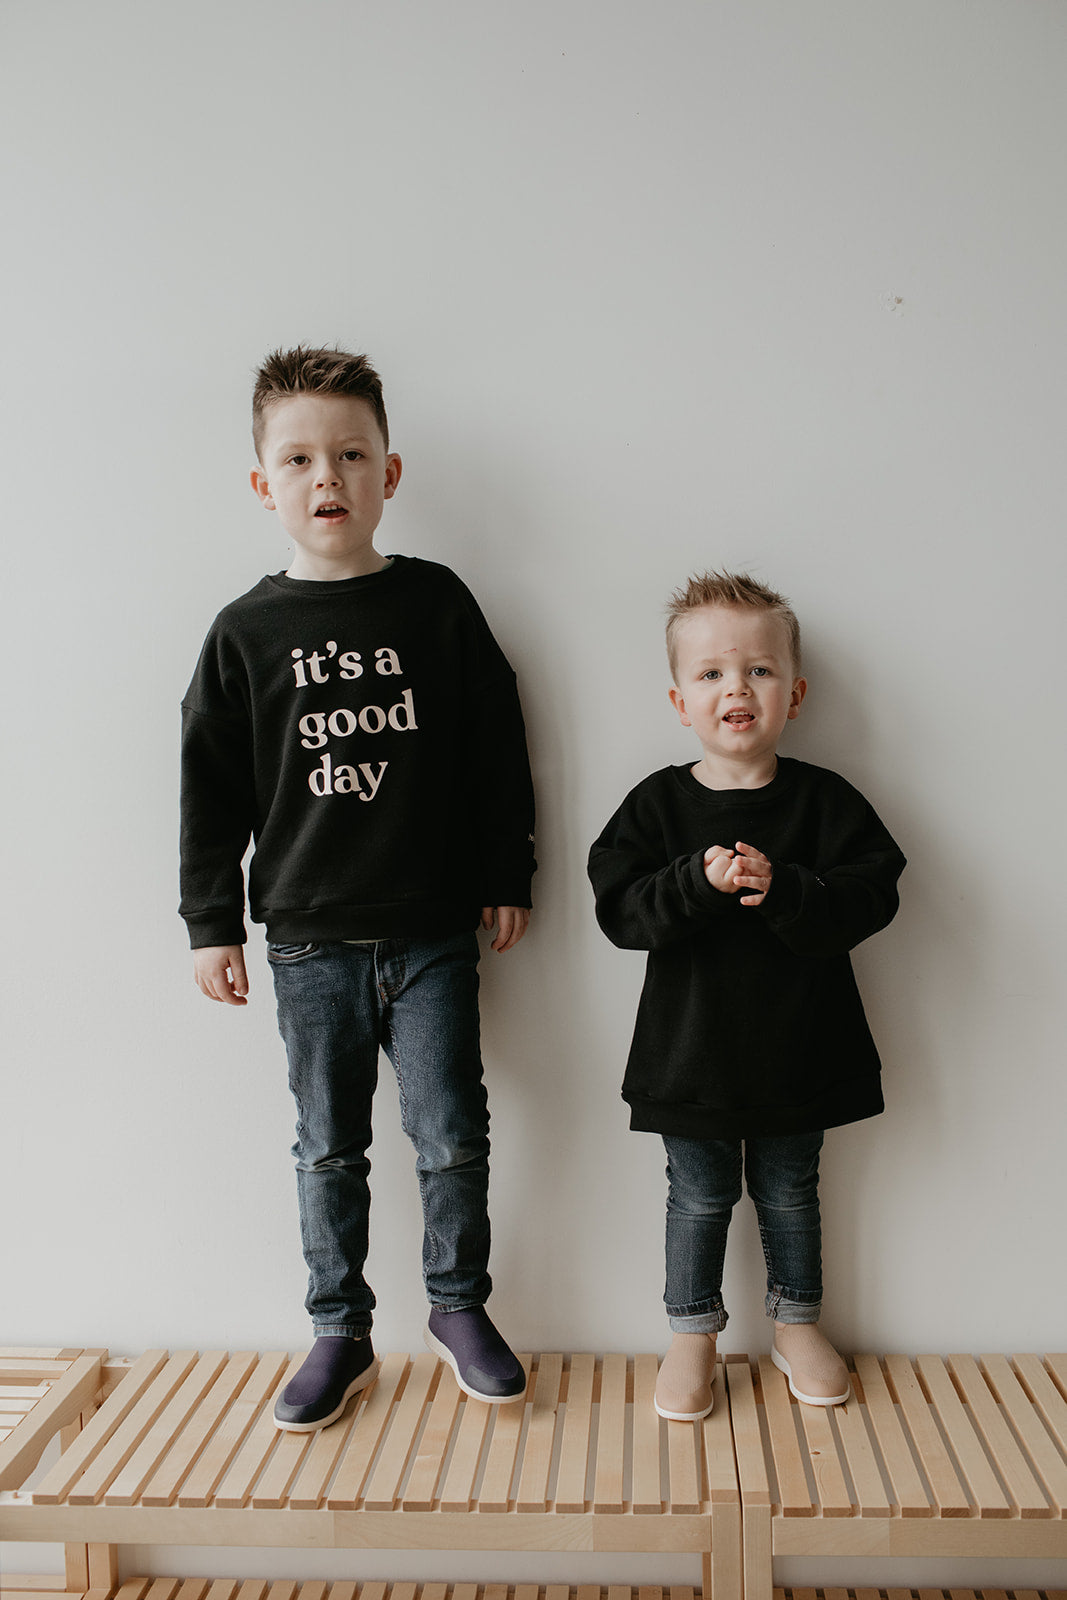 Kids Crew Neck Pullover - Basic - Black Shirts & Tops heyfolks 